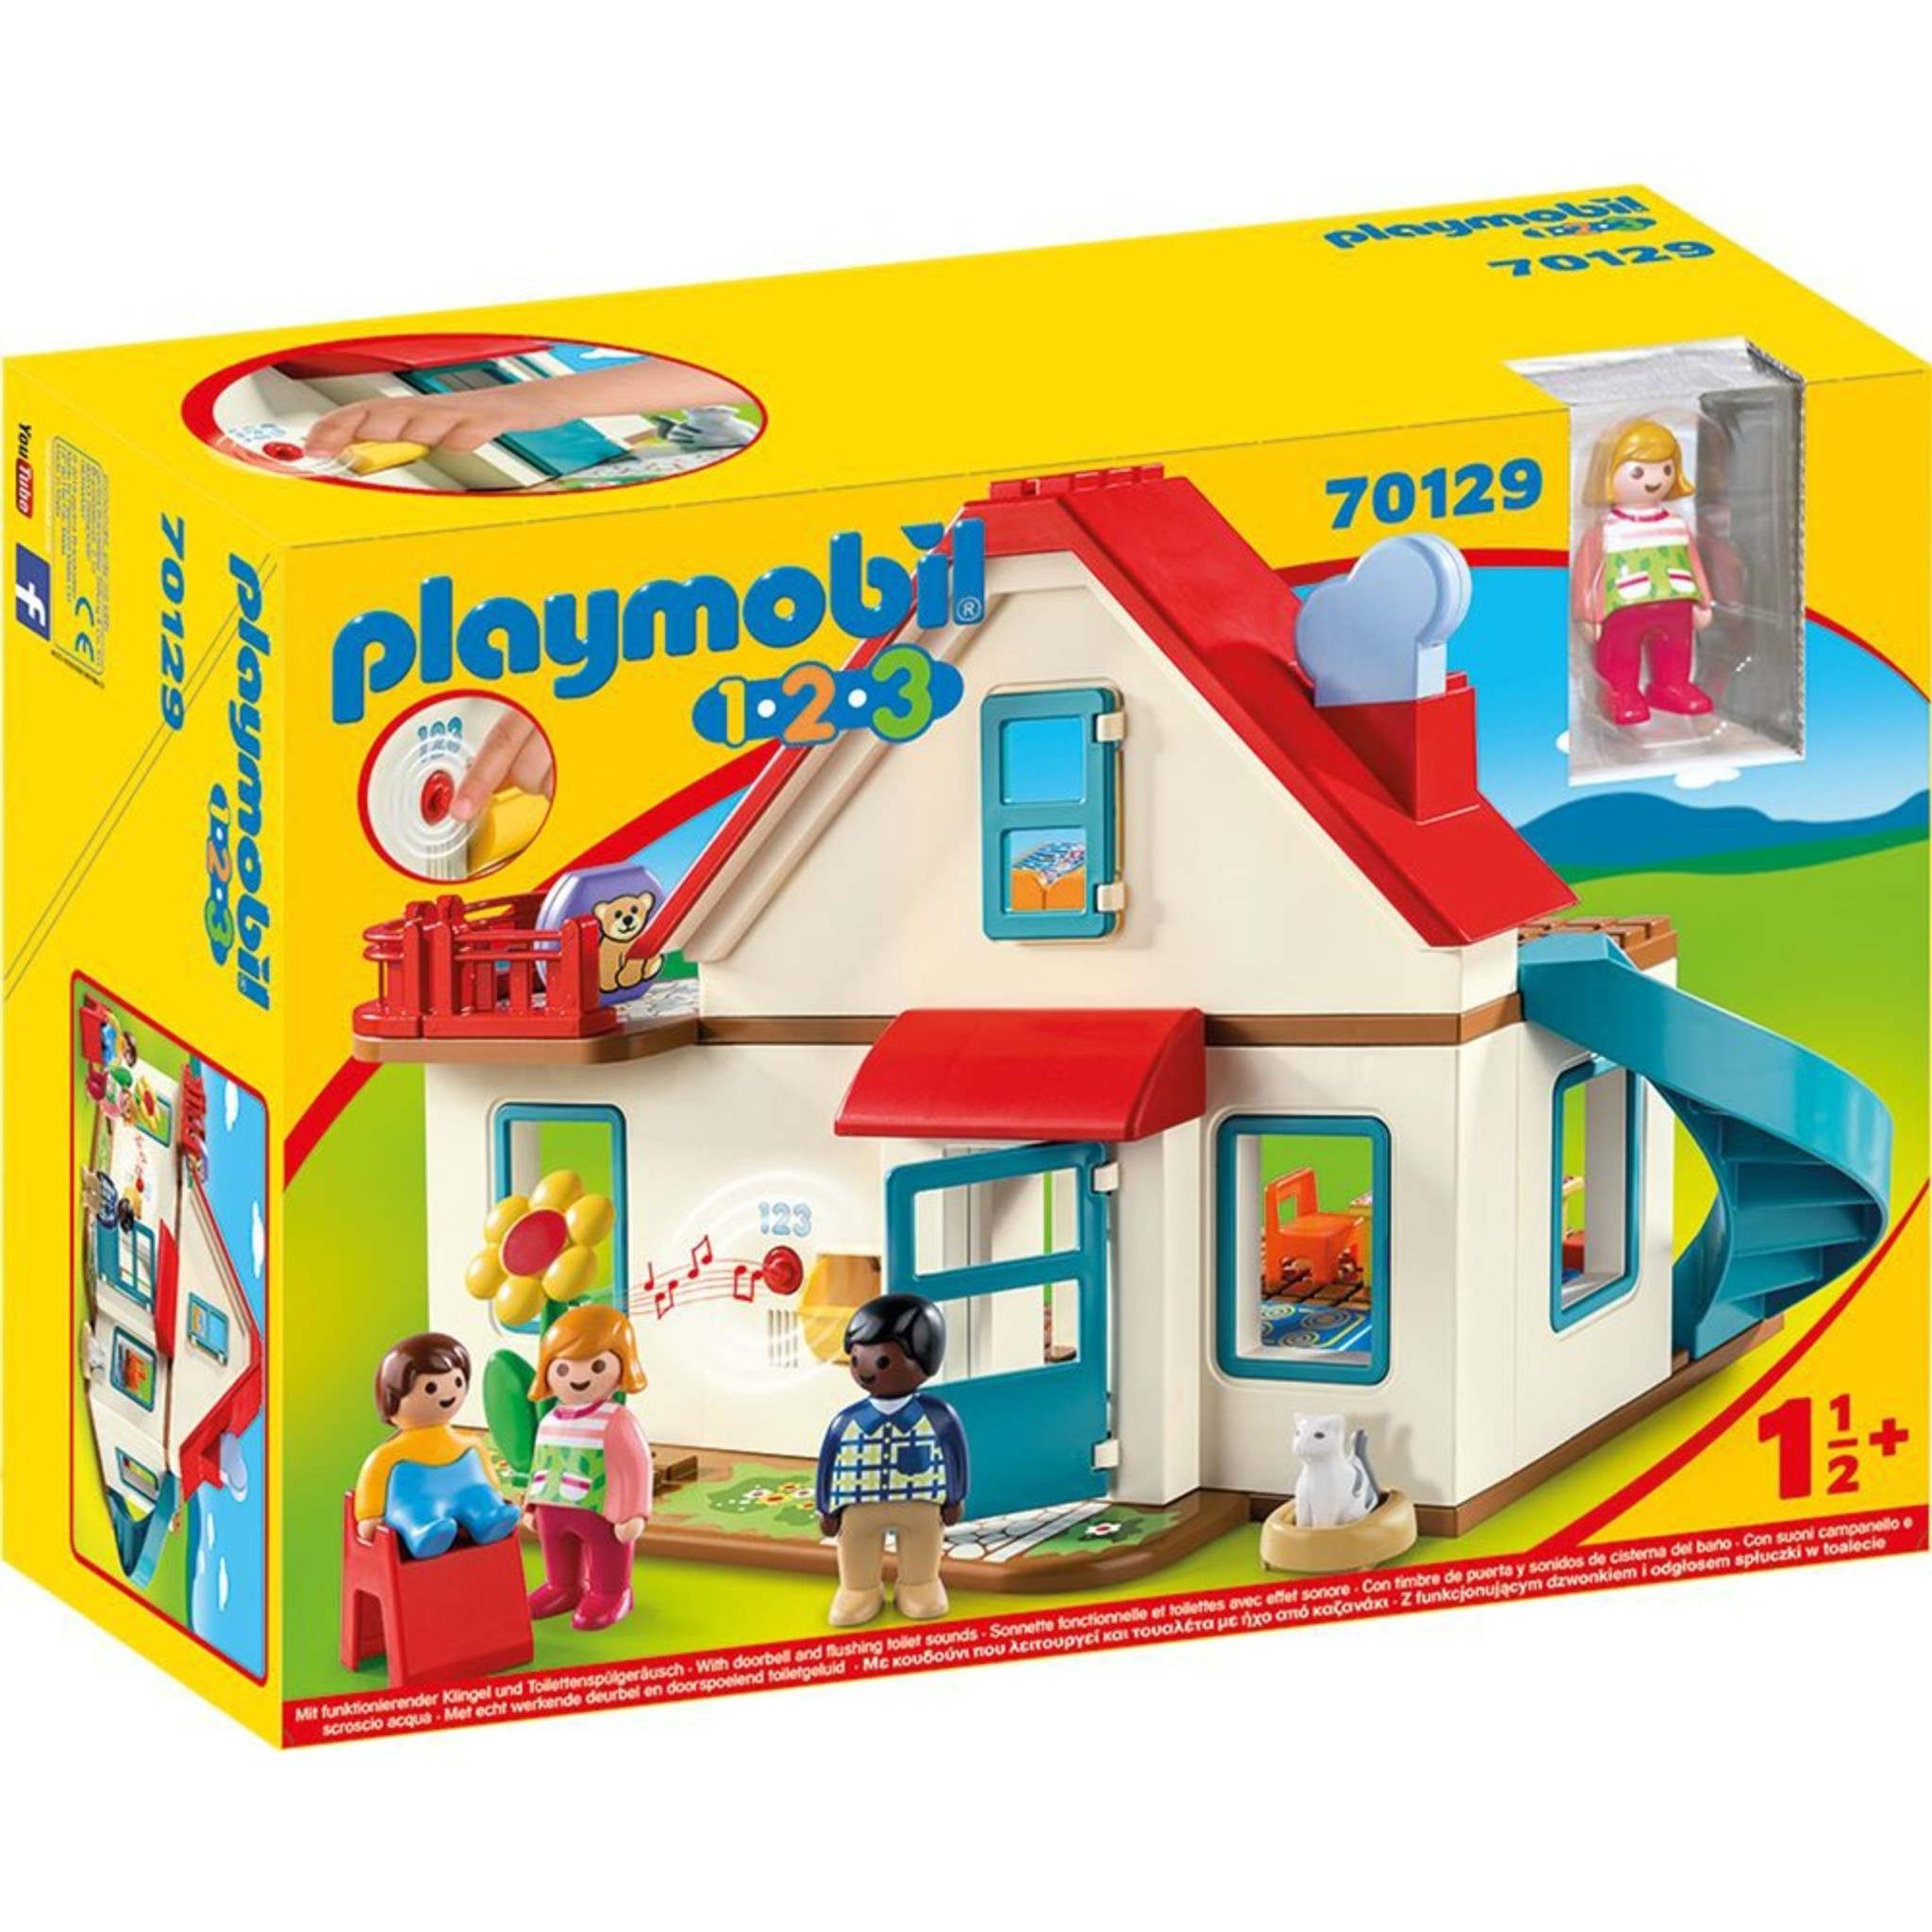 Playmobil 123 Family - The Barn